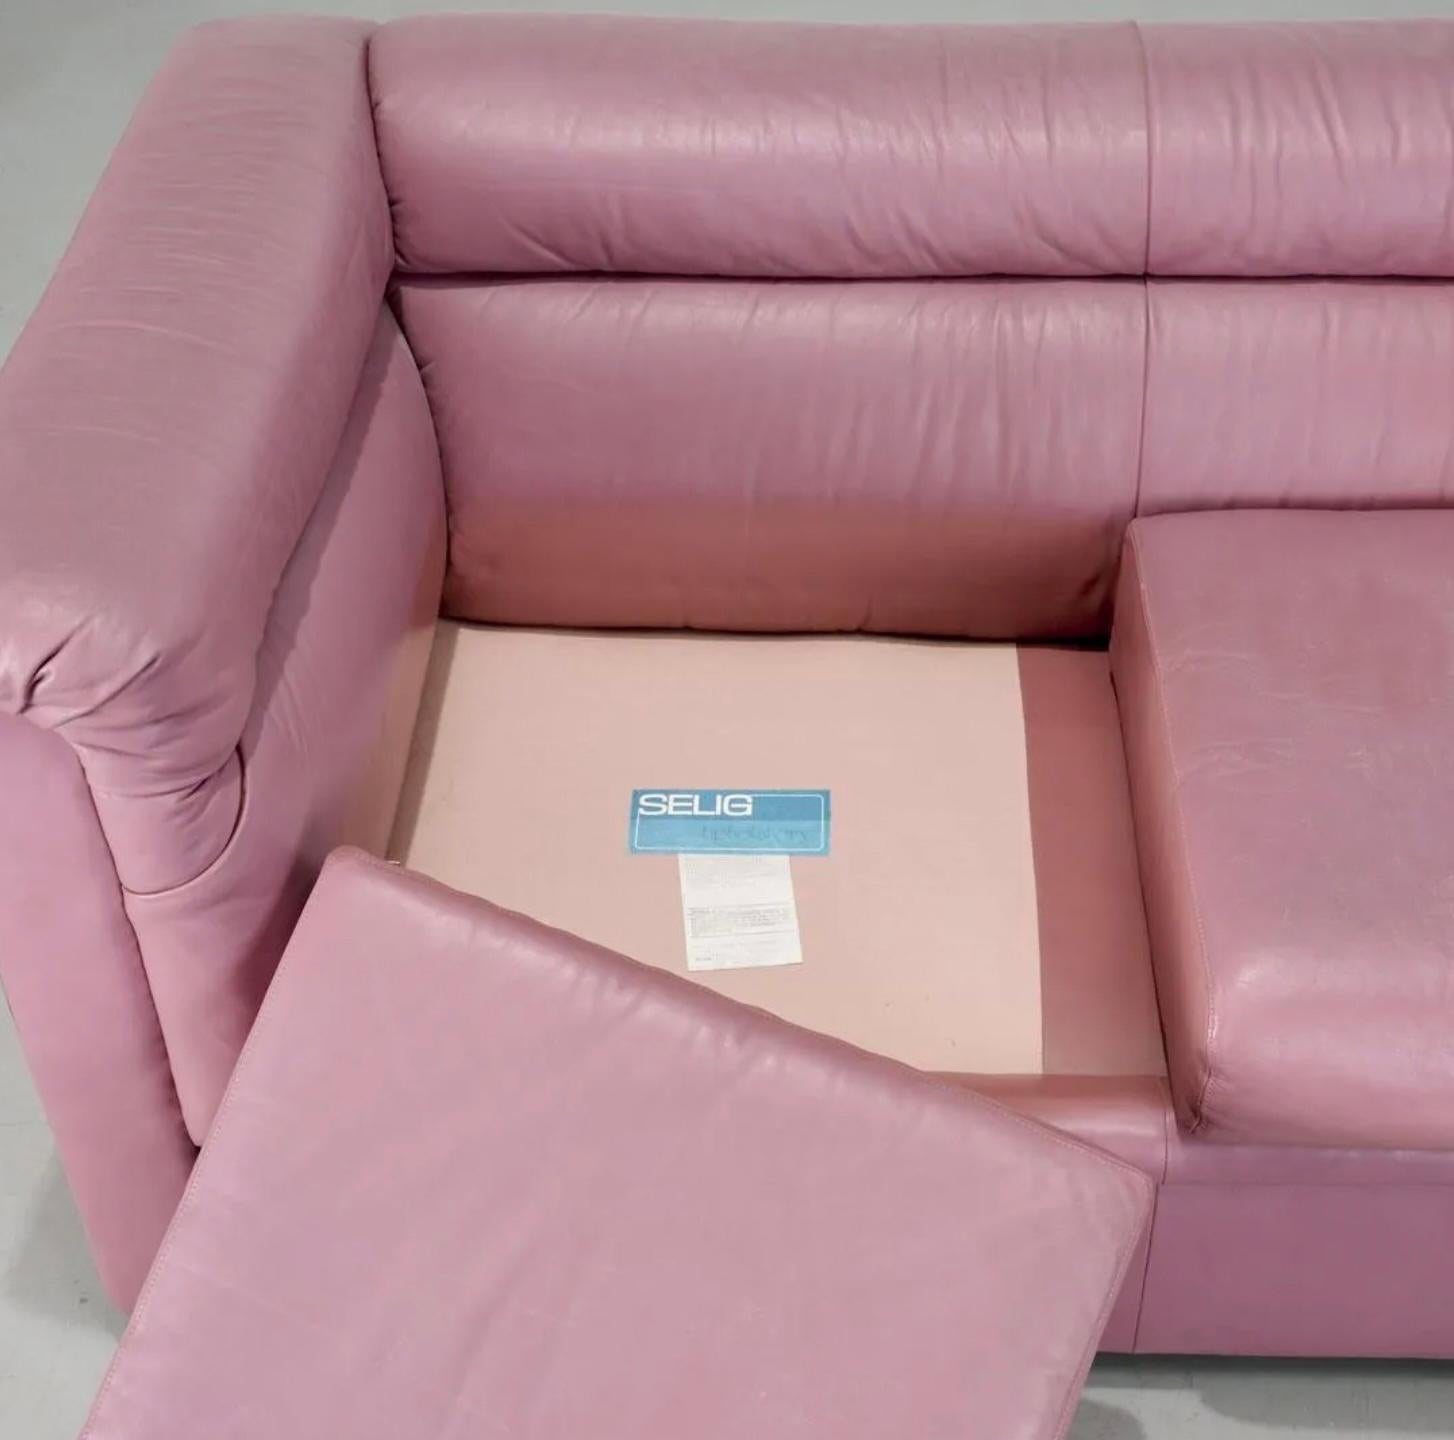 Postmodernes Mauve-rosa Leder-Puffy-Sofa 1980er Jahre Selig mit 2 Sitzen im Zustand „Gut“ im Angebot in BROOKLYN, NY